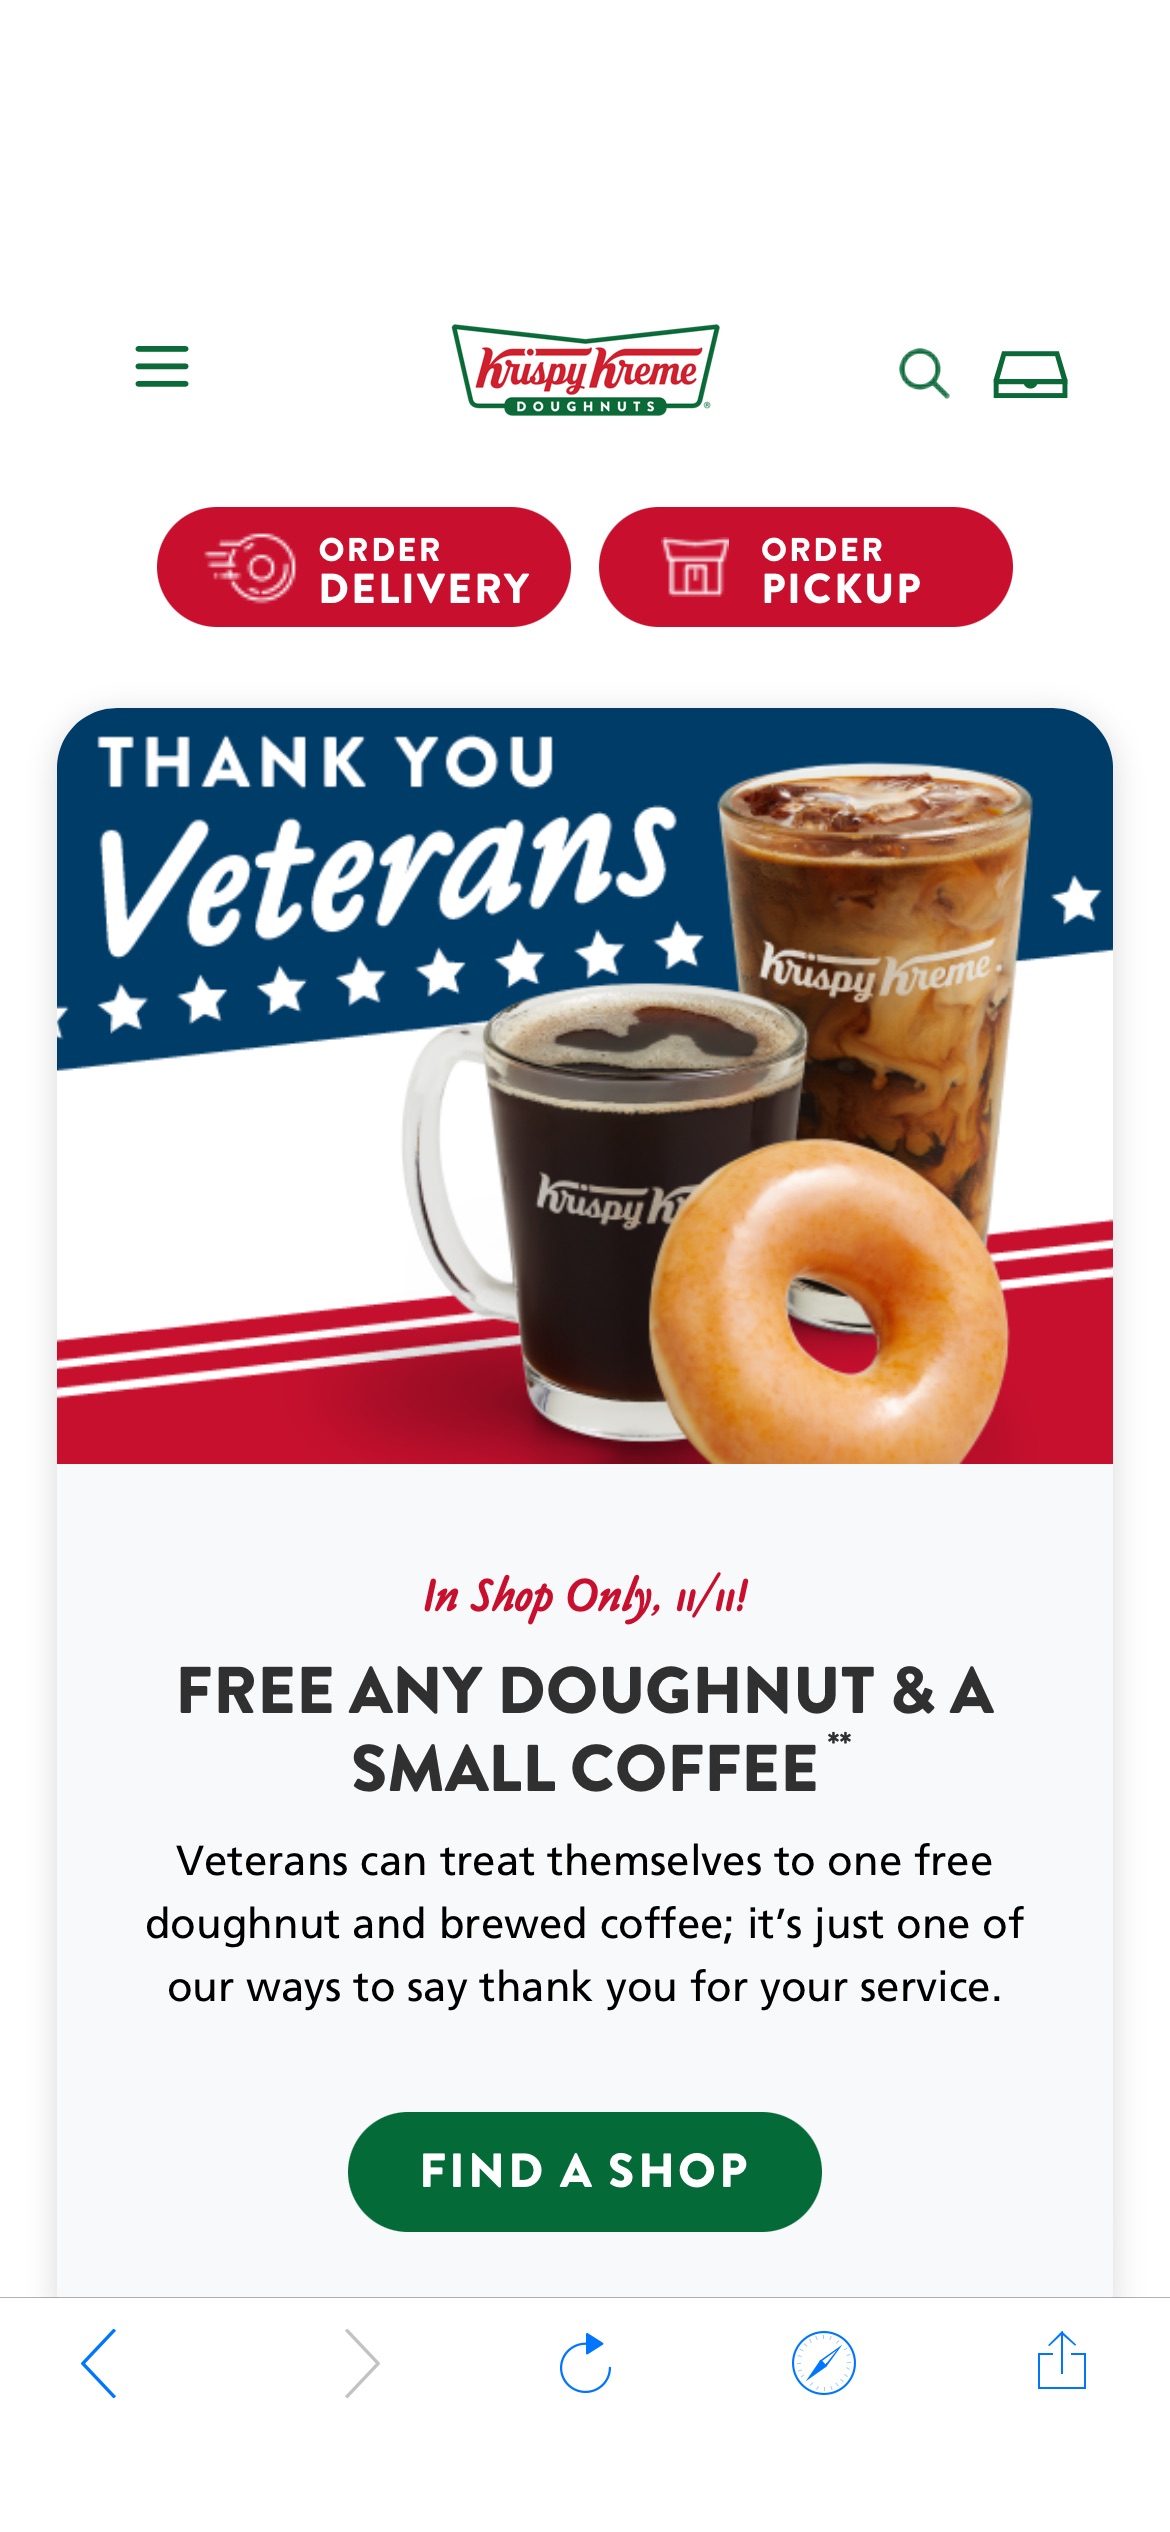 Krespy Kream - 退伍老兵可以免费领一个甜甜圈和咖啡